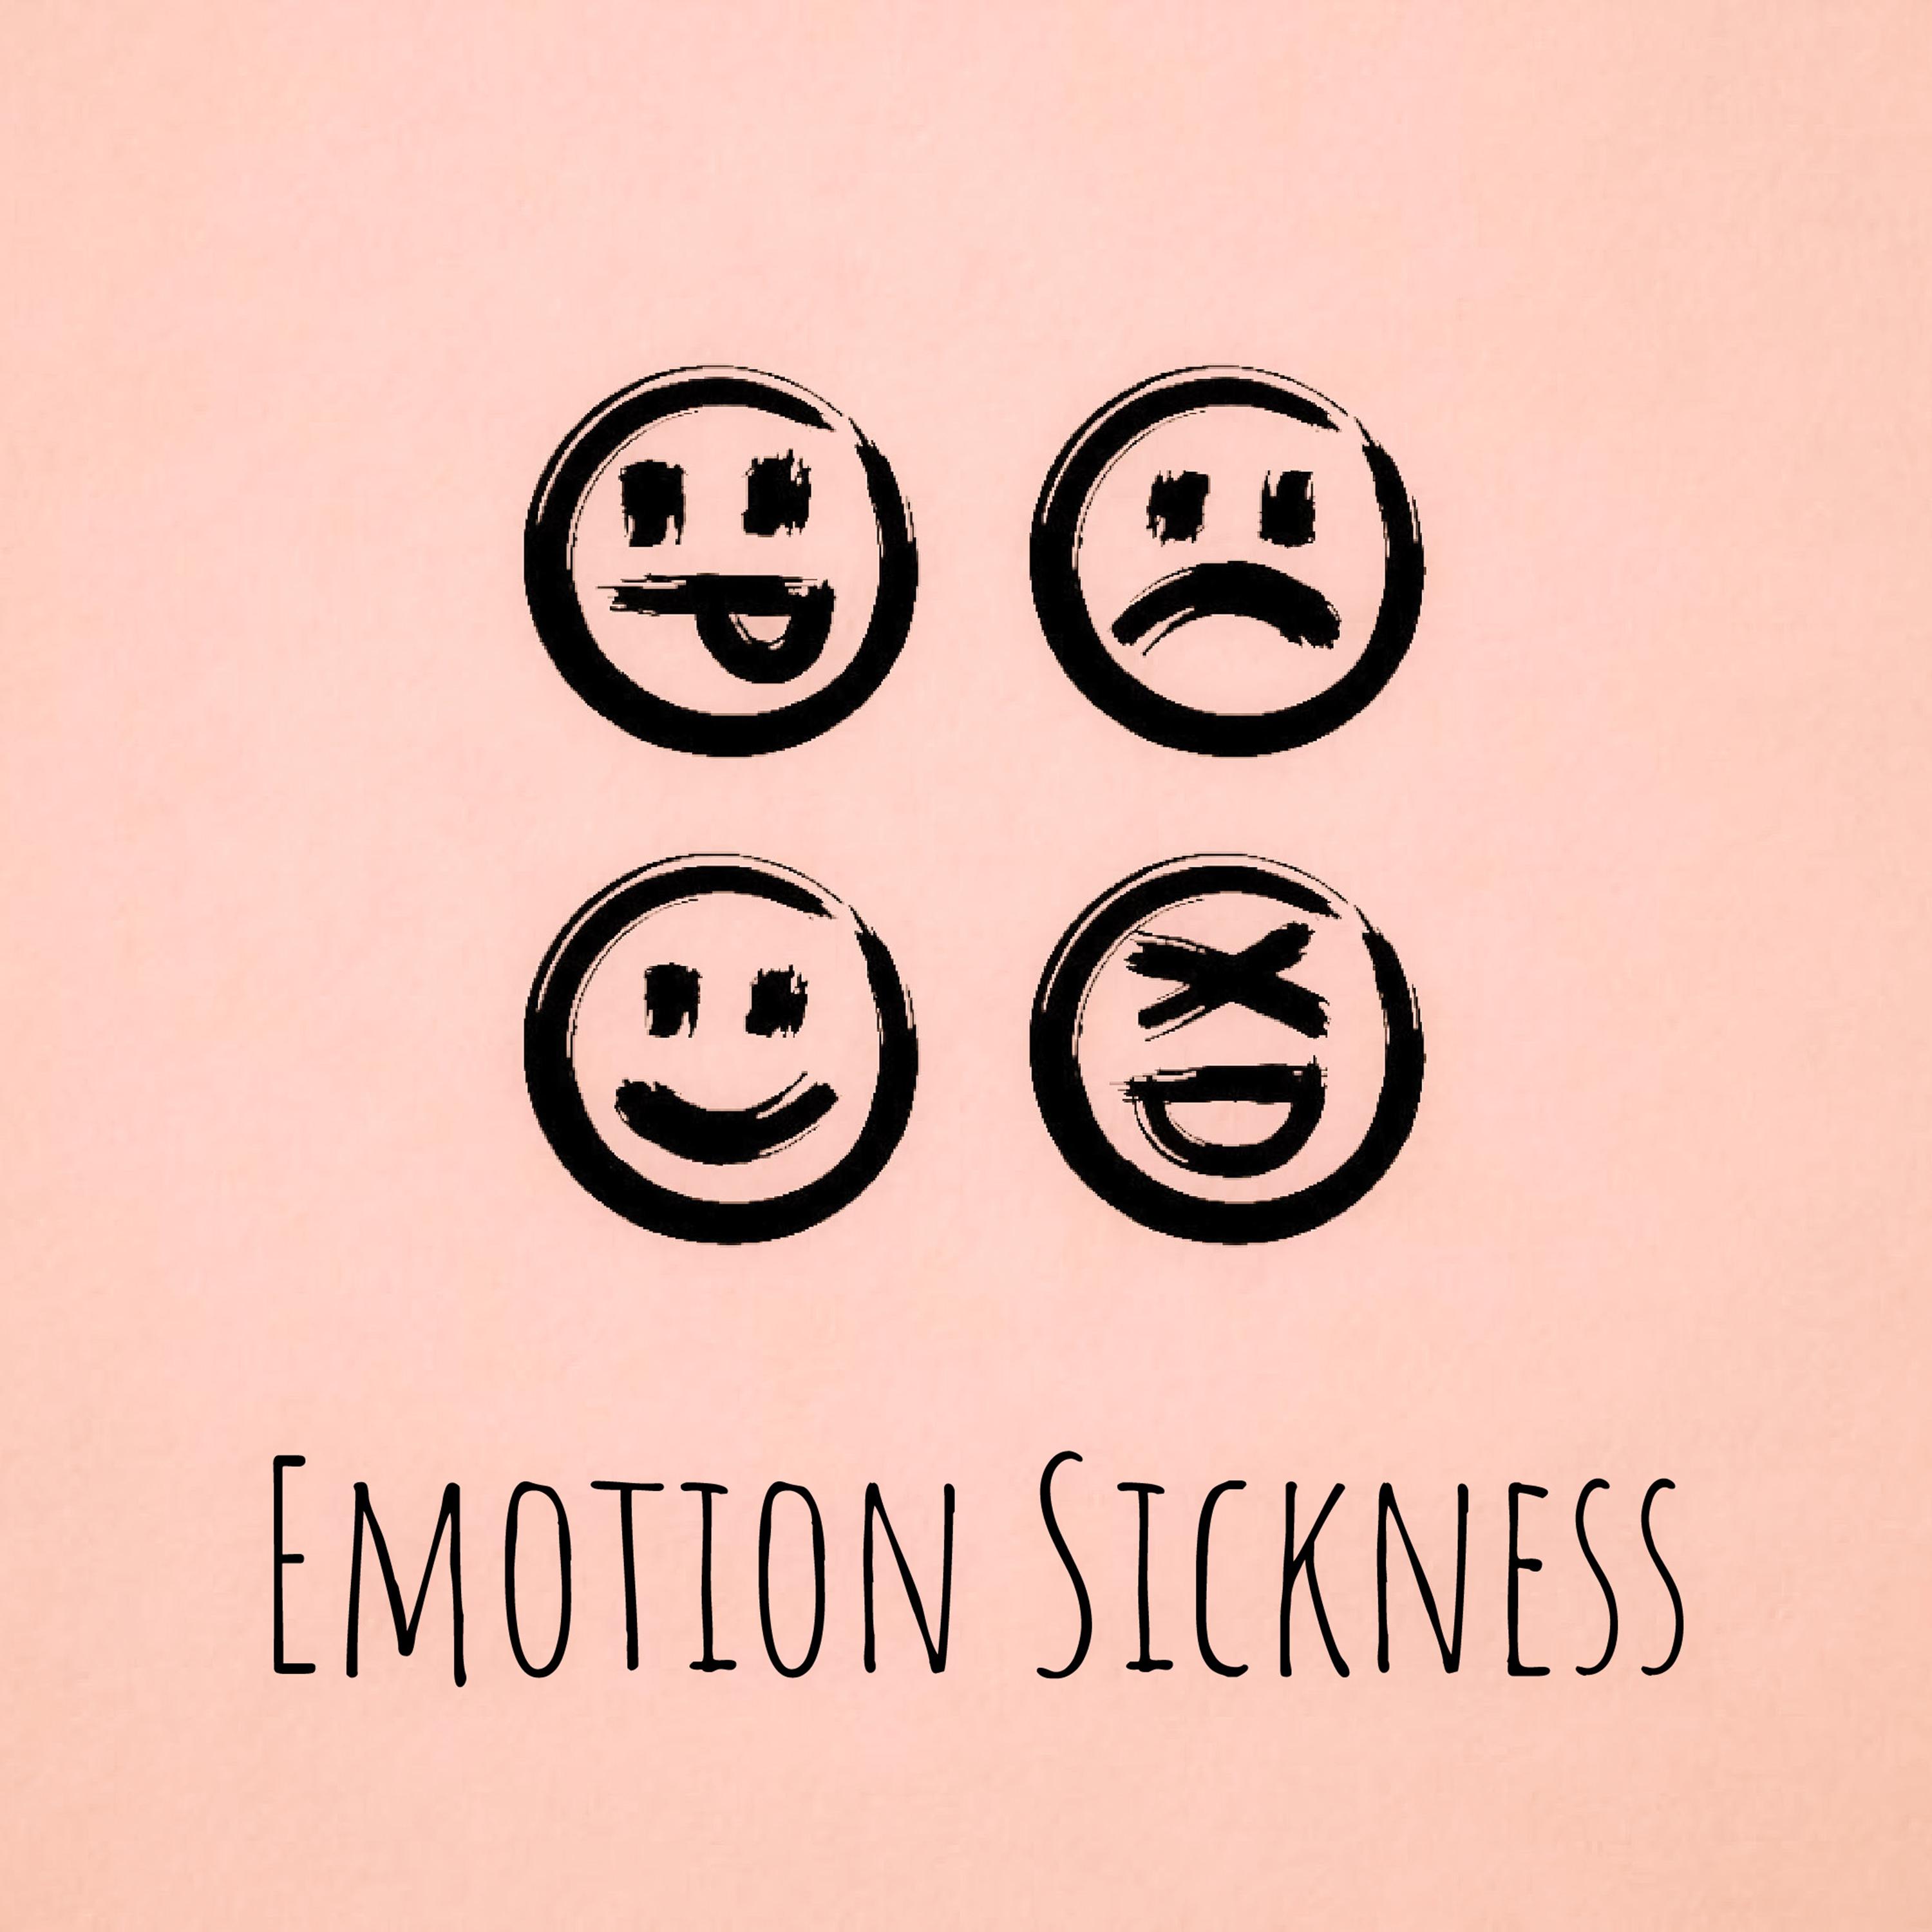 Emotion Sickness